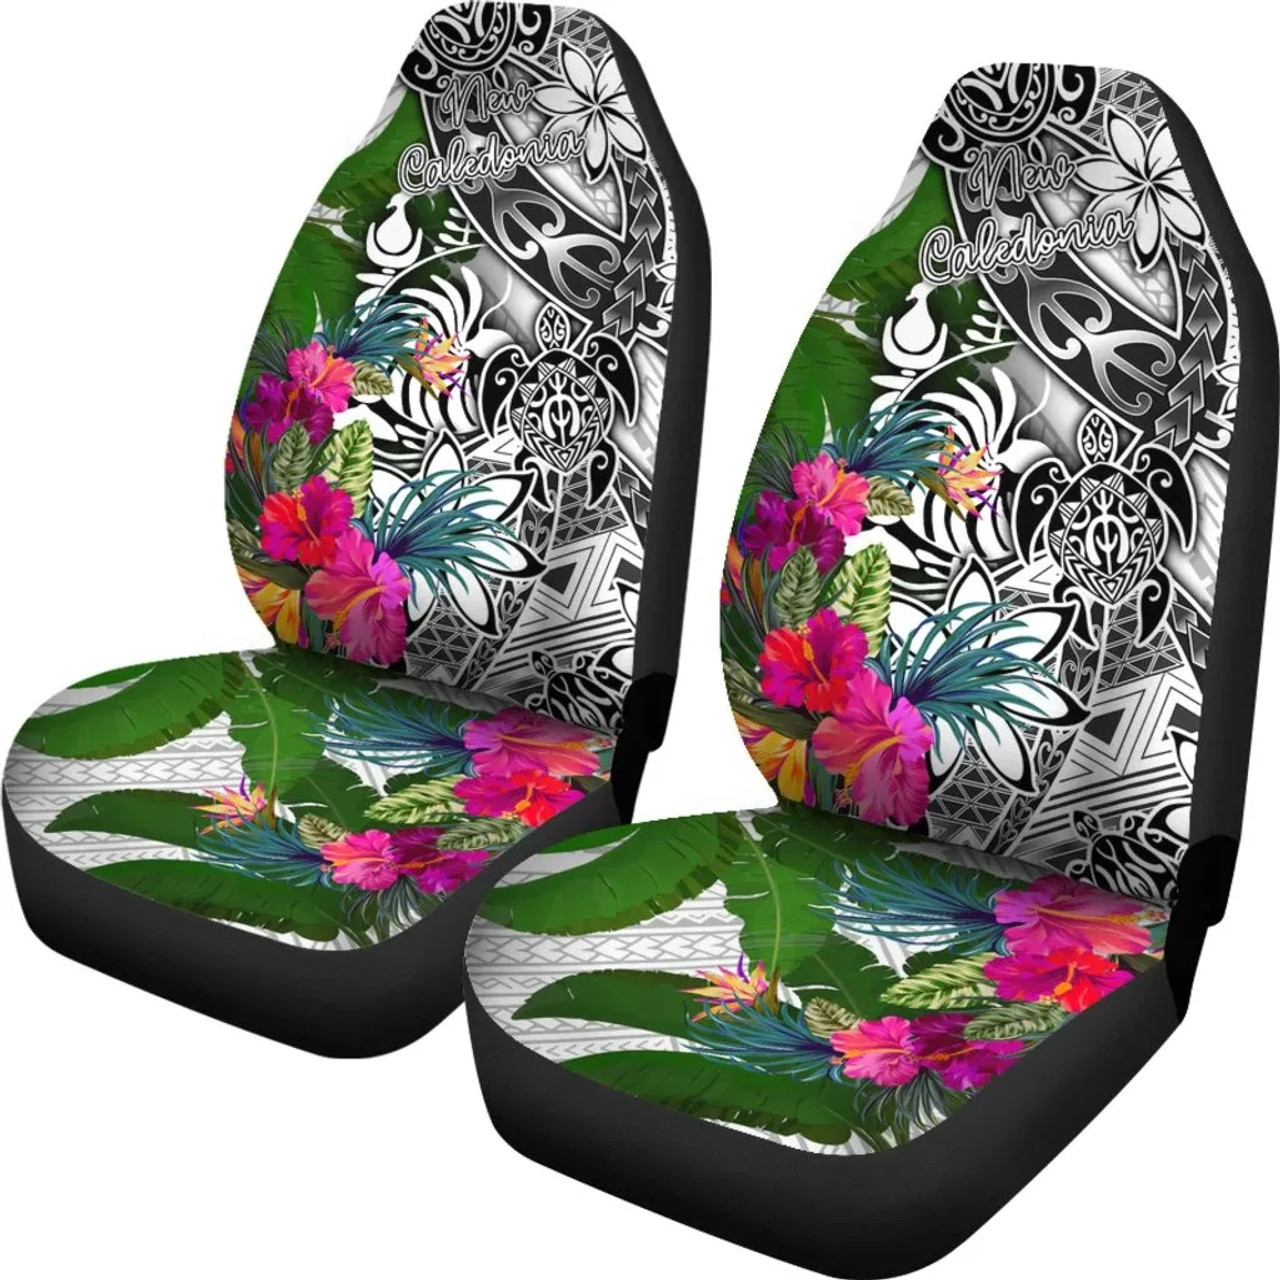 New Caledonia Car Seat Covers White - Turtle Plumeria Banana Leaf Crest